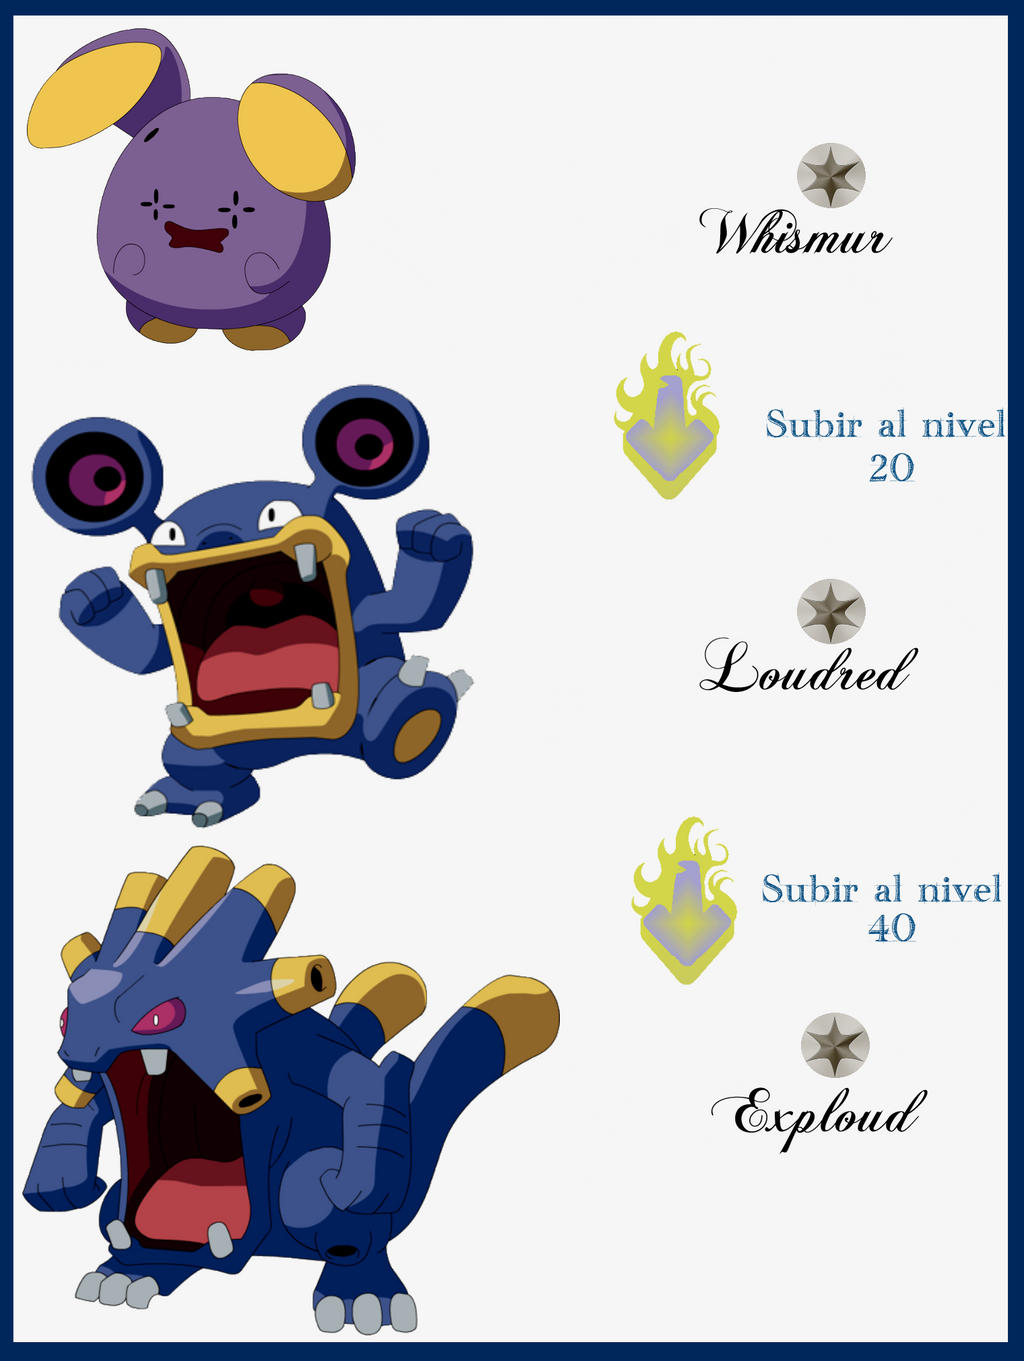 Pokemon Whismur Evolution Chart